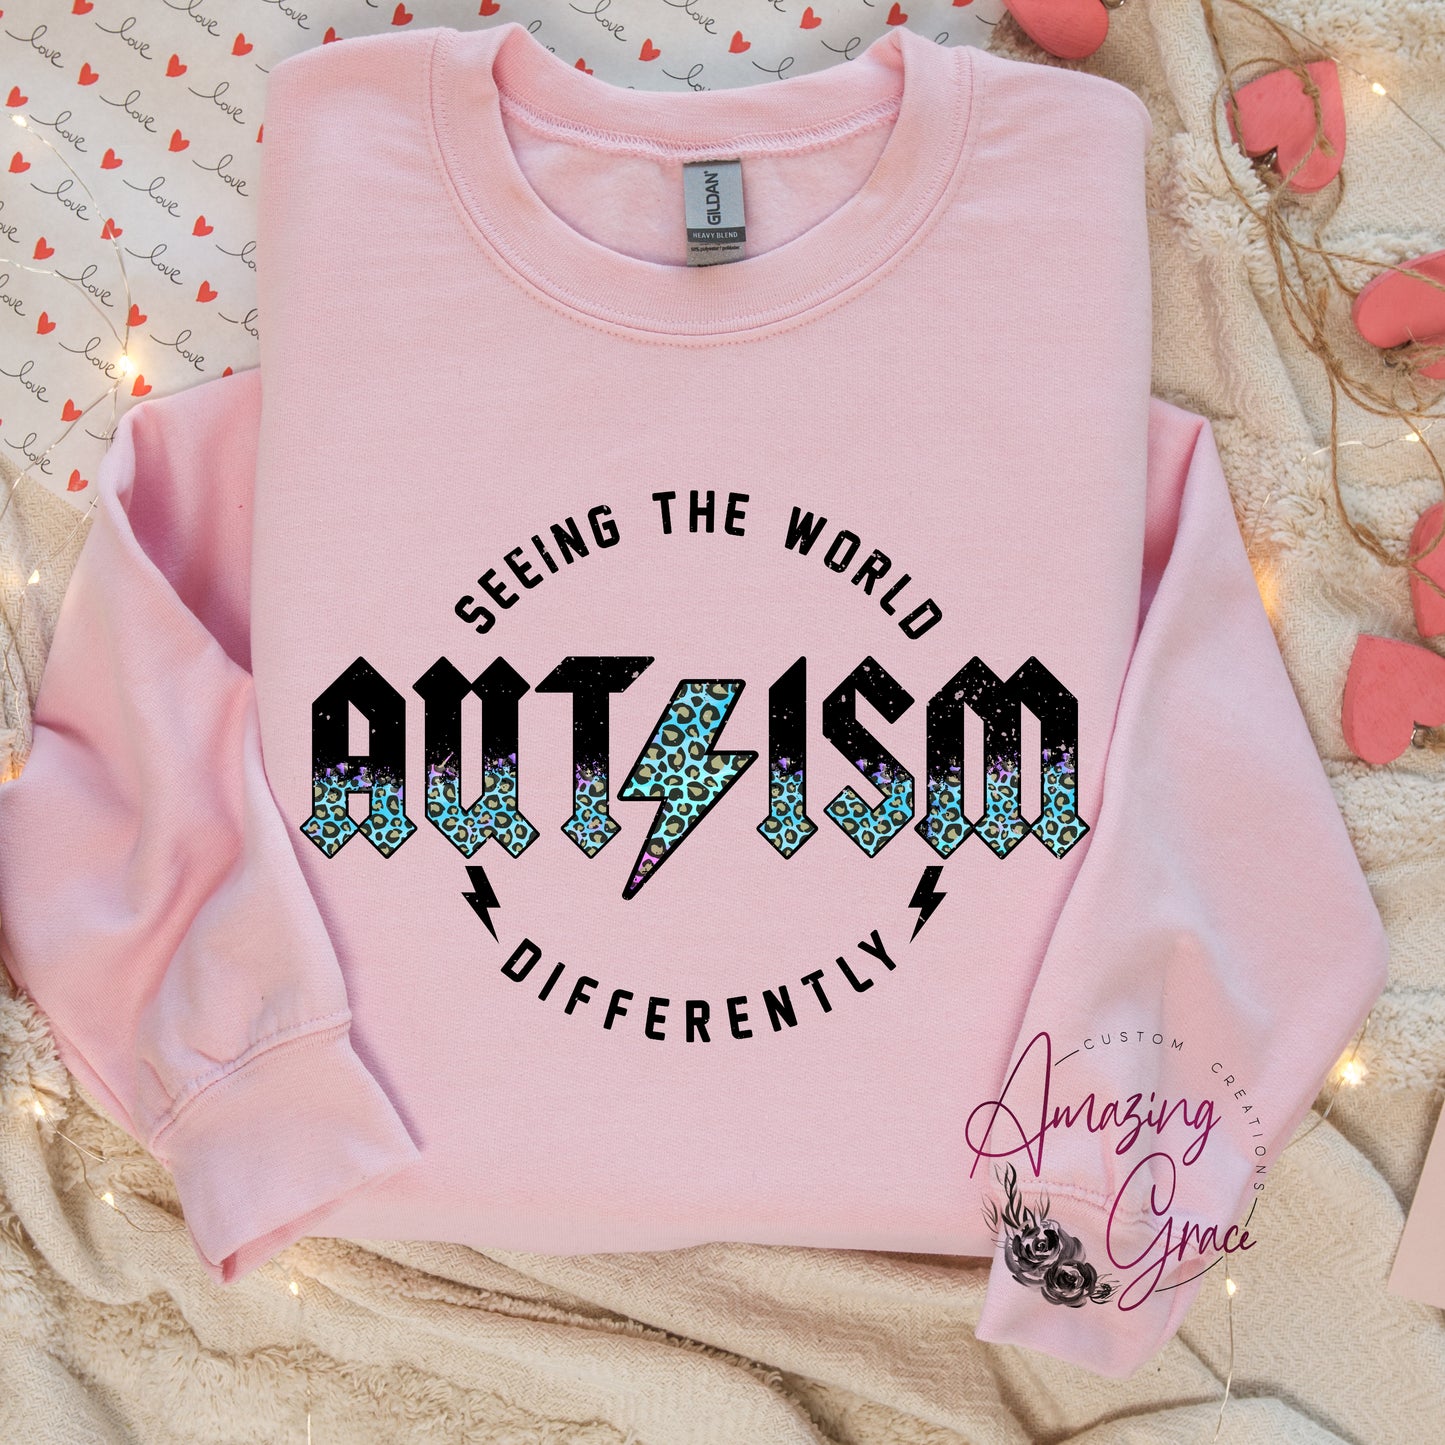 Autism "SEEING THE WORLD DIFFERENTLY" sweatshirt